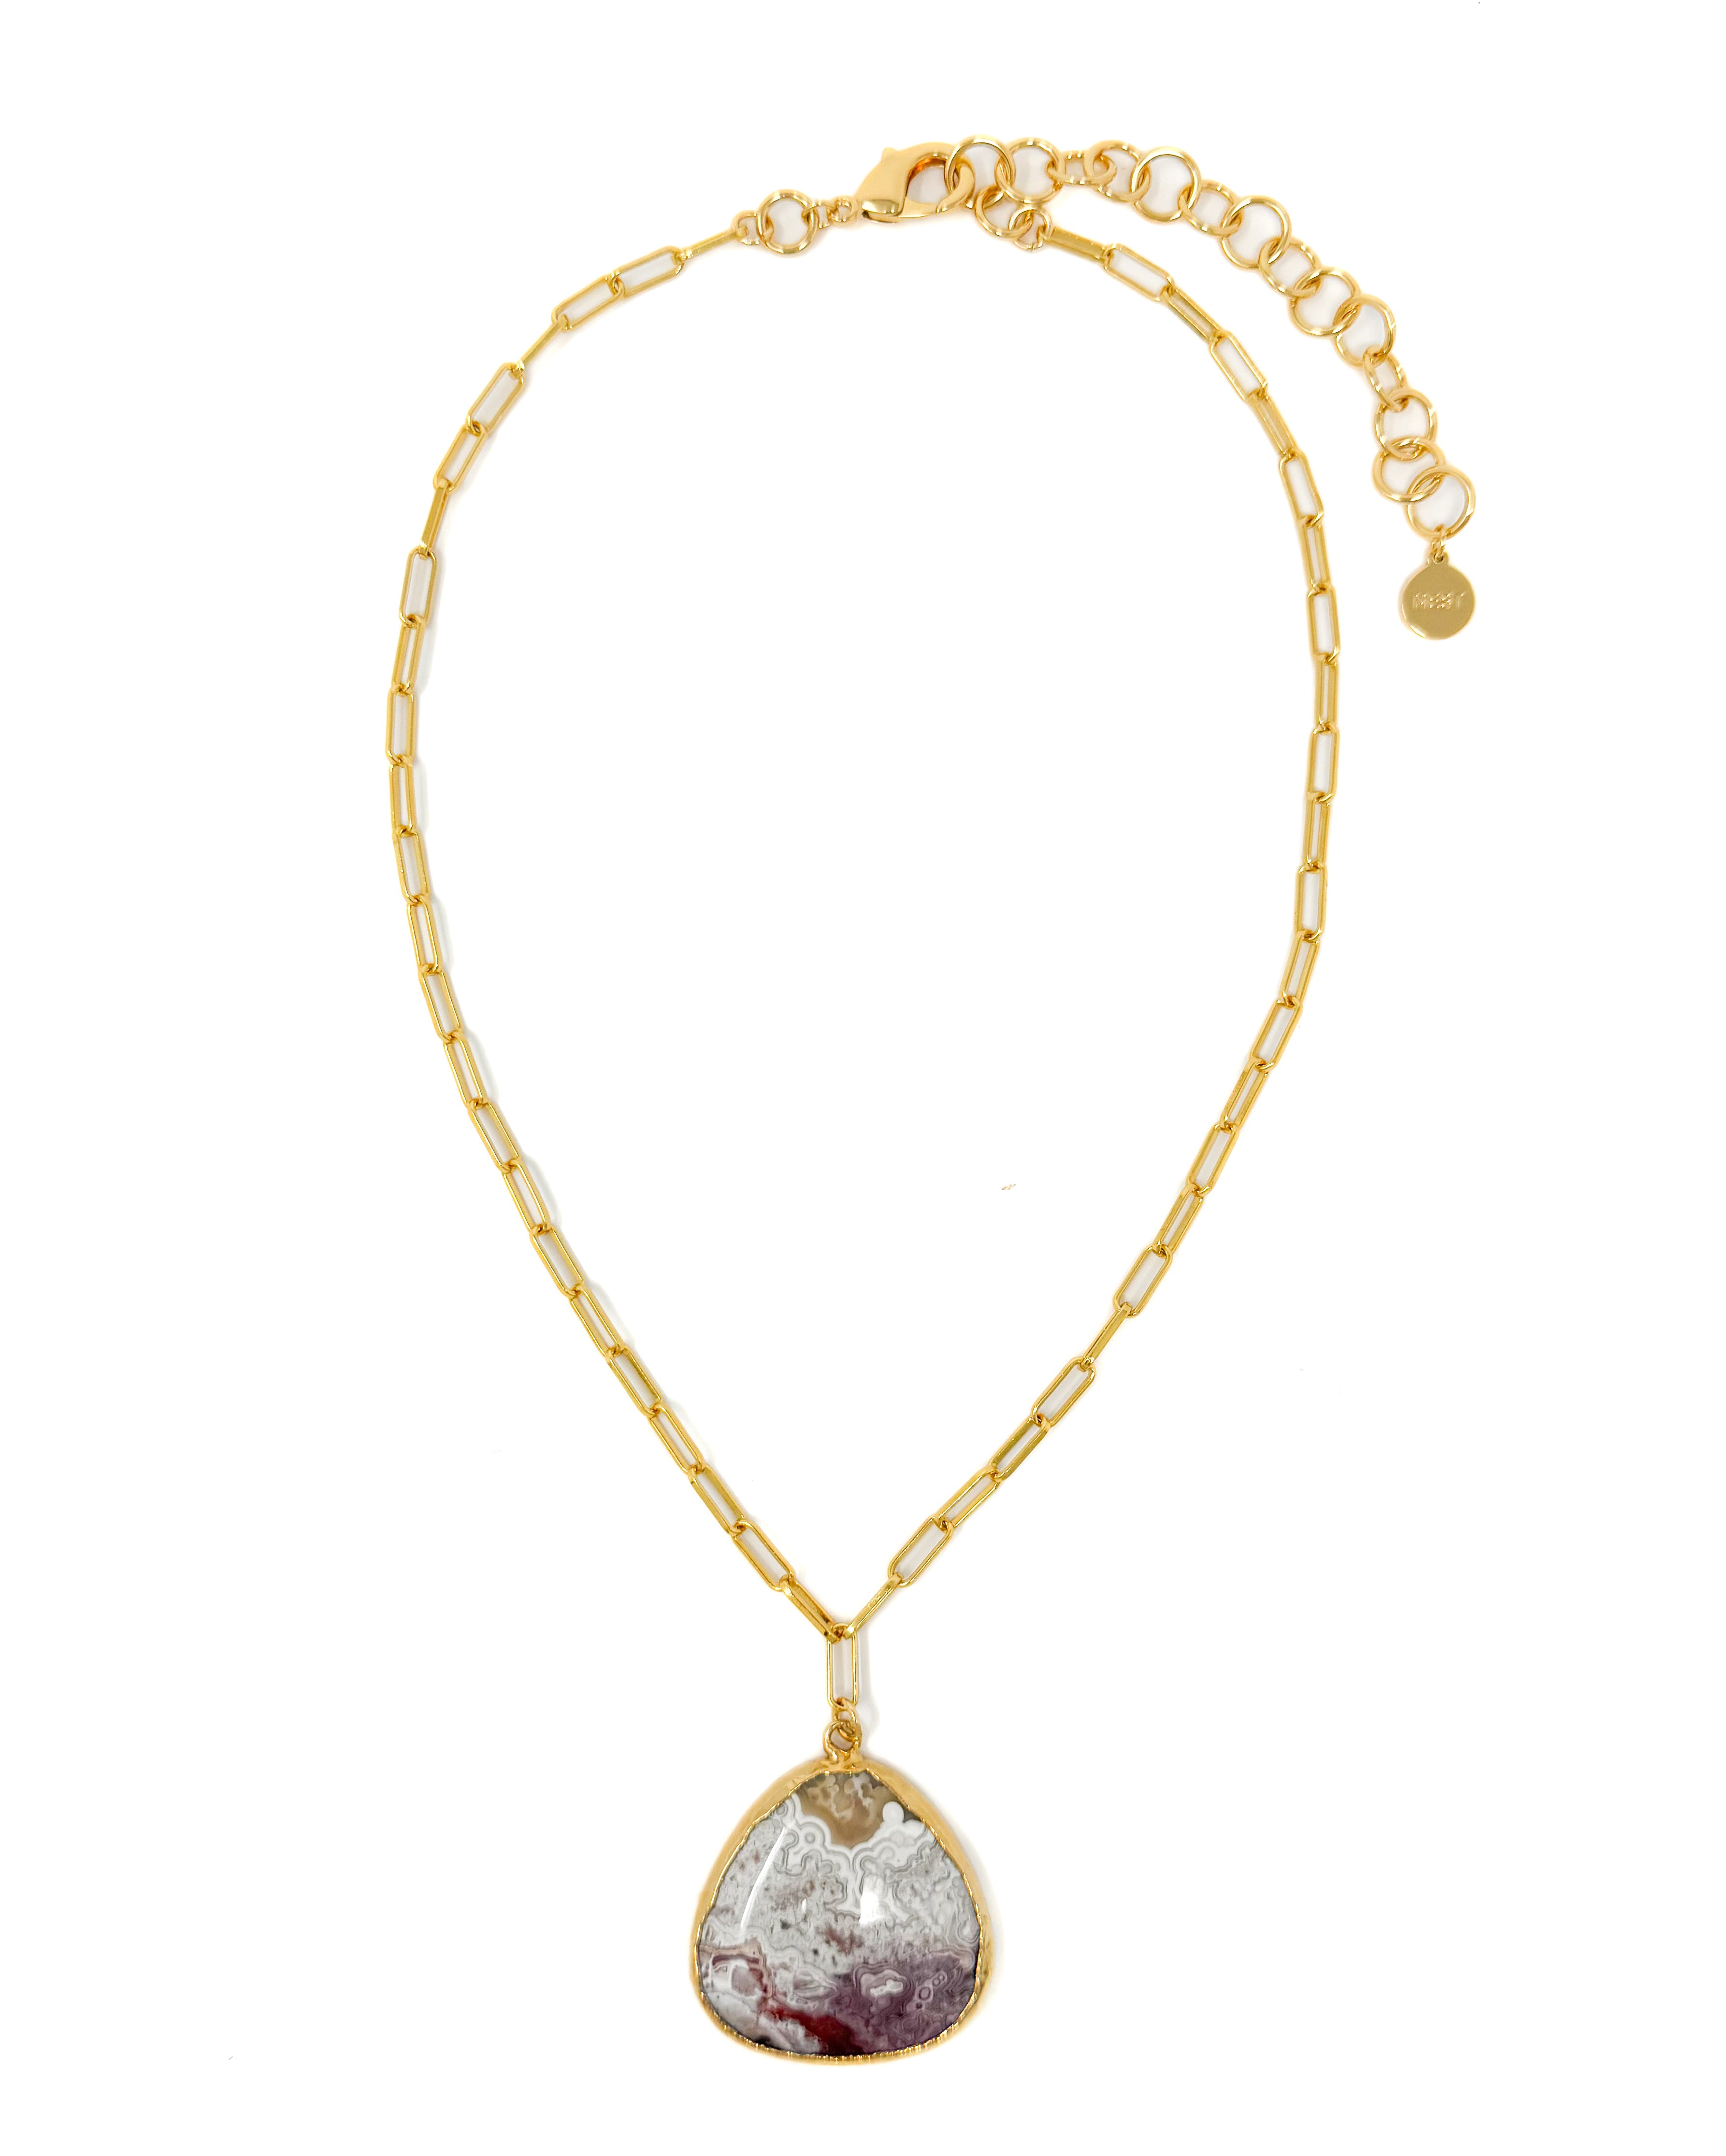 Lace Agate Paperclip Chain Pendant Necklace